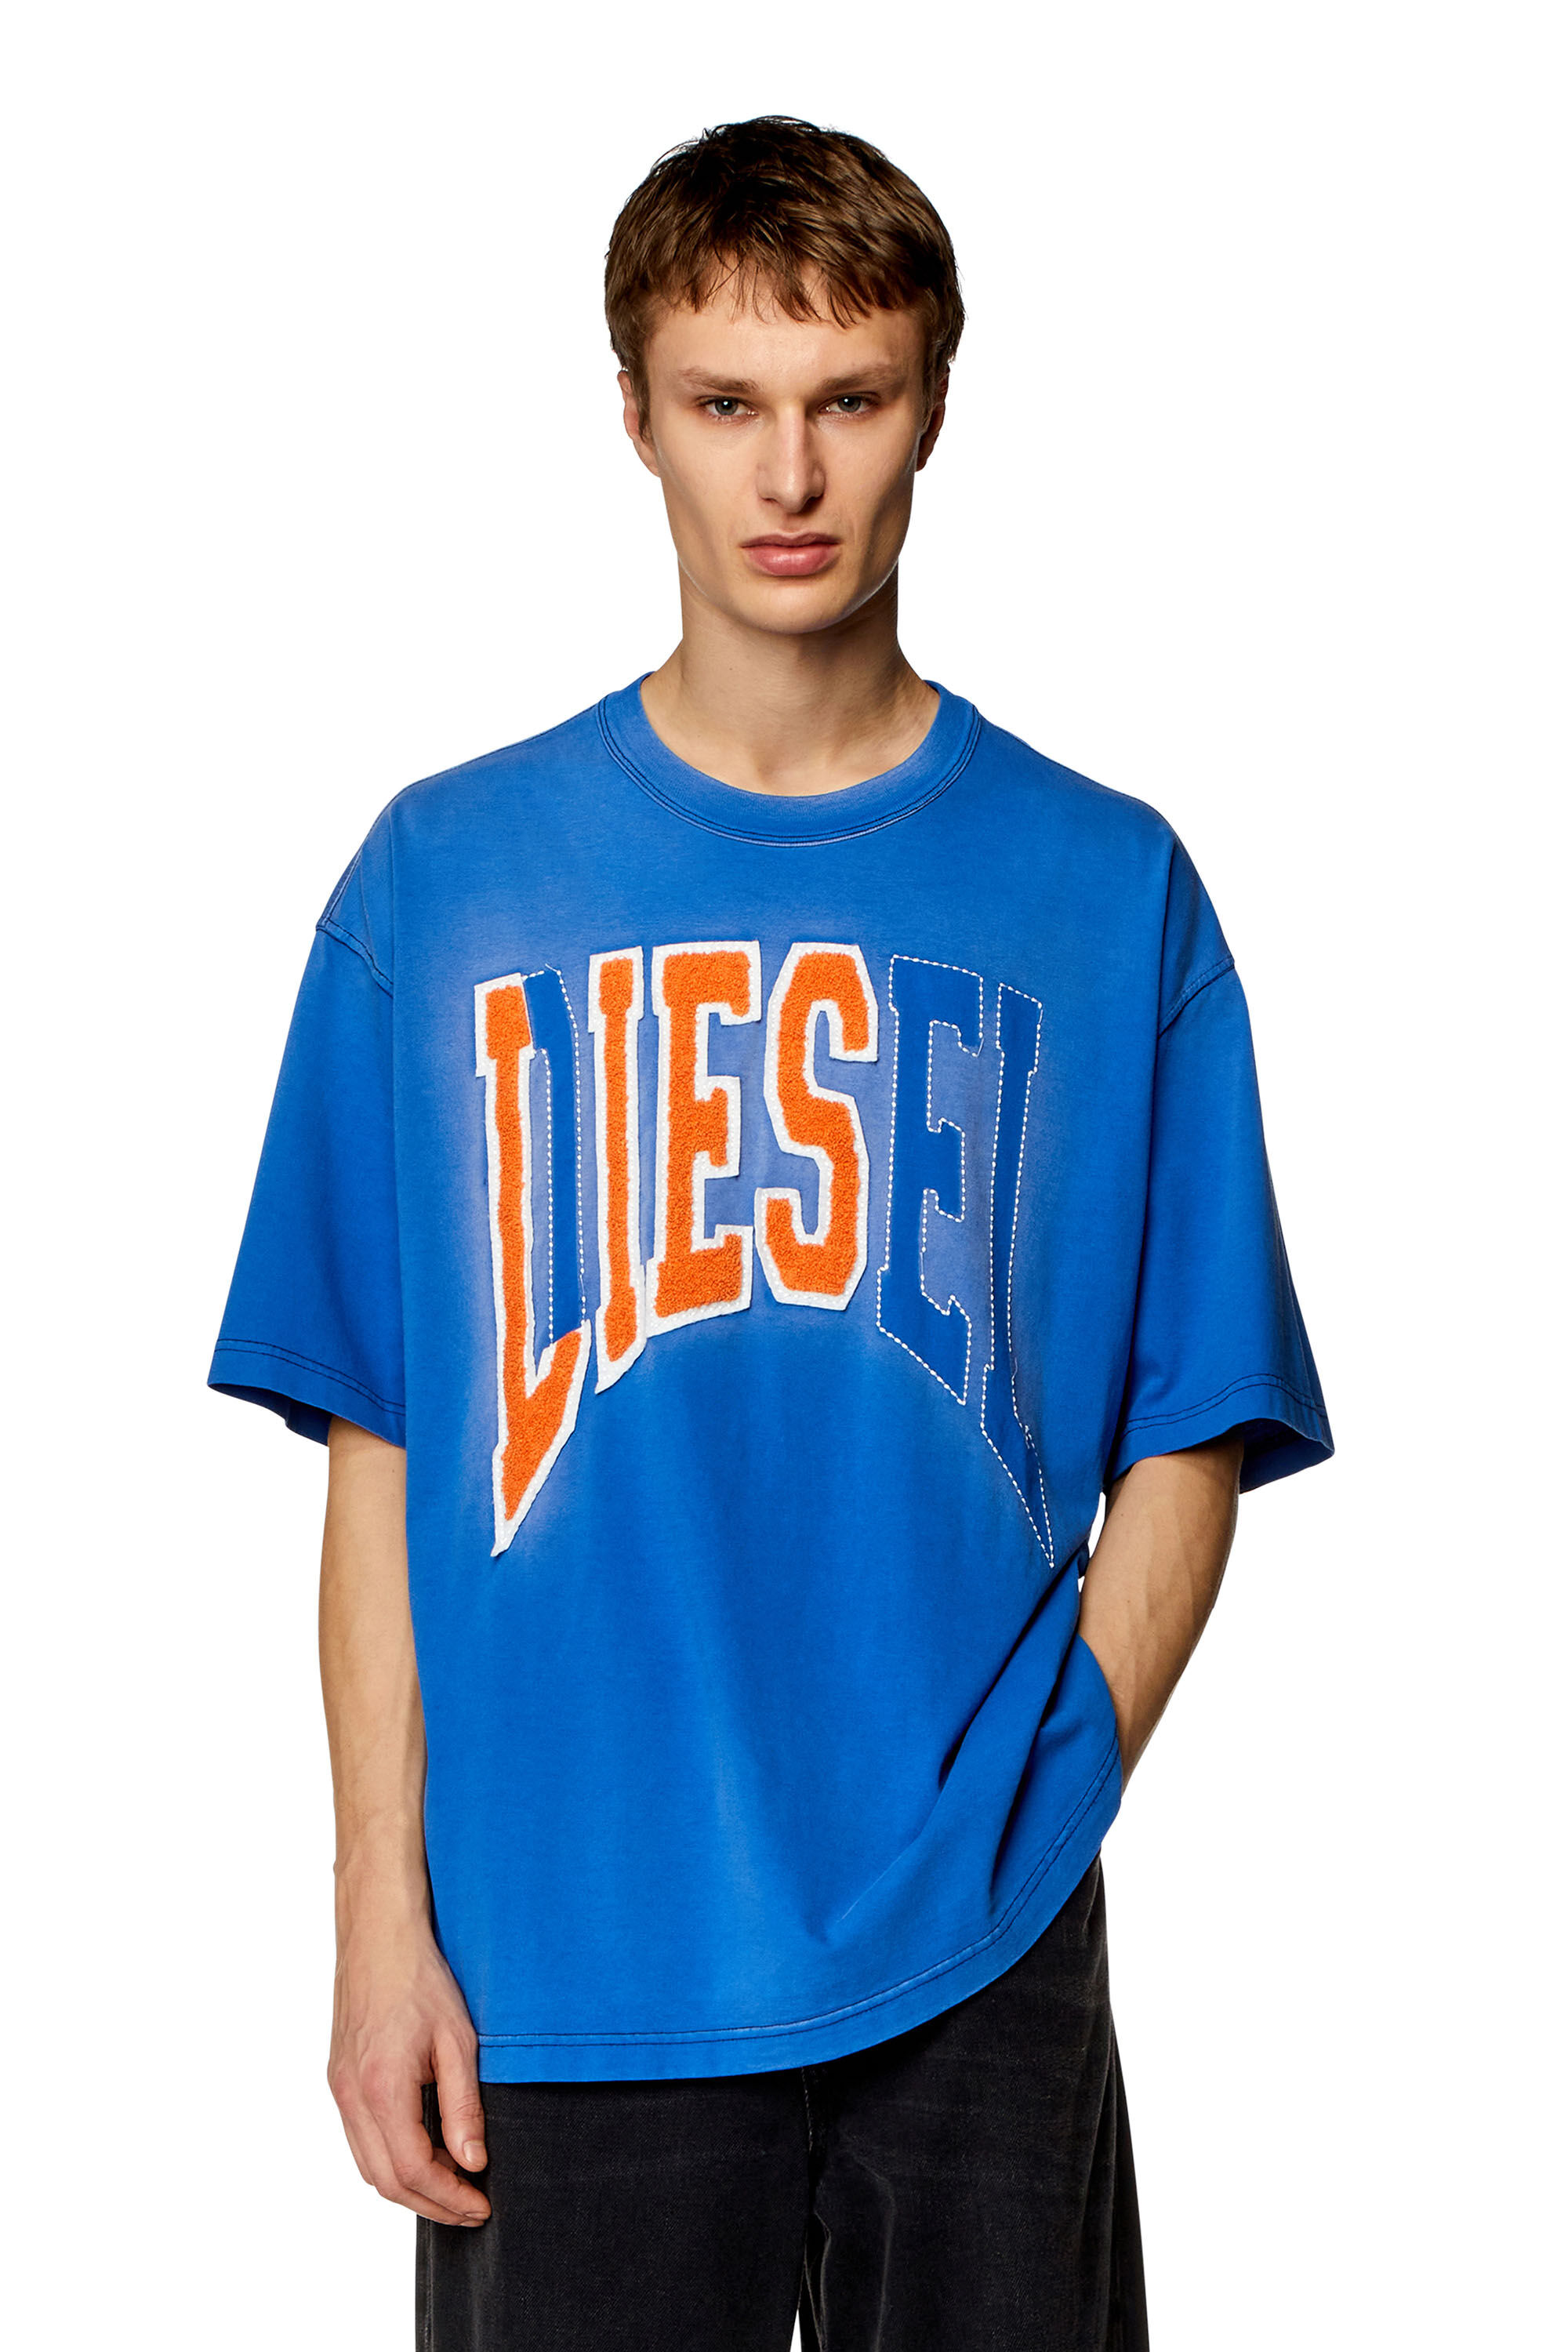 Diesel - T-WASH-N, Man Oversized T-shirt with Diesel Lies logo in Blue - Image 3